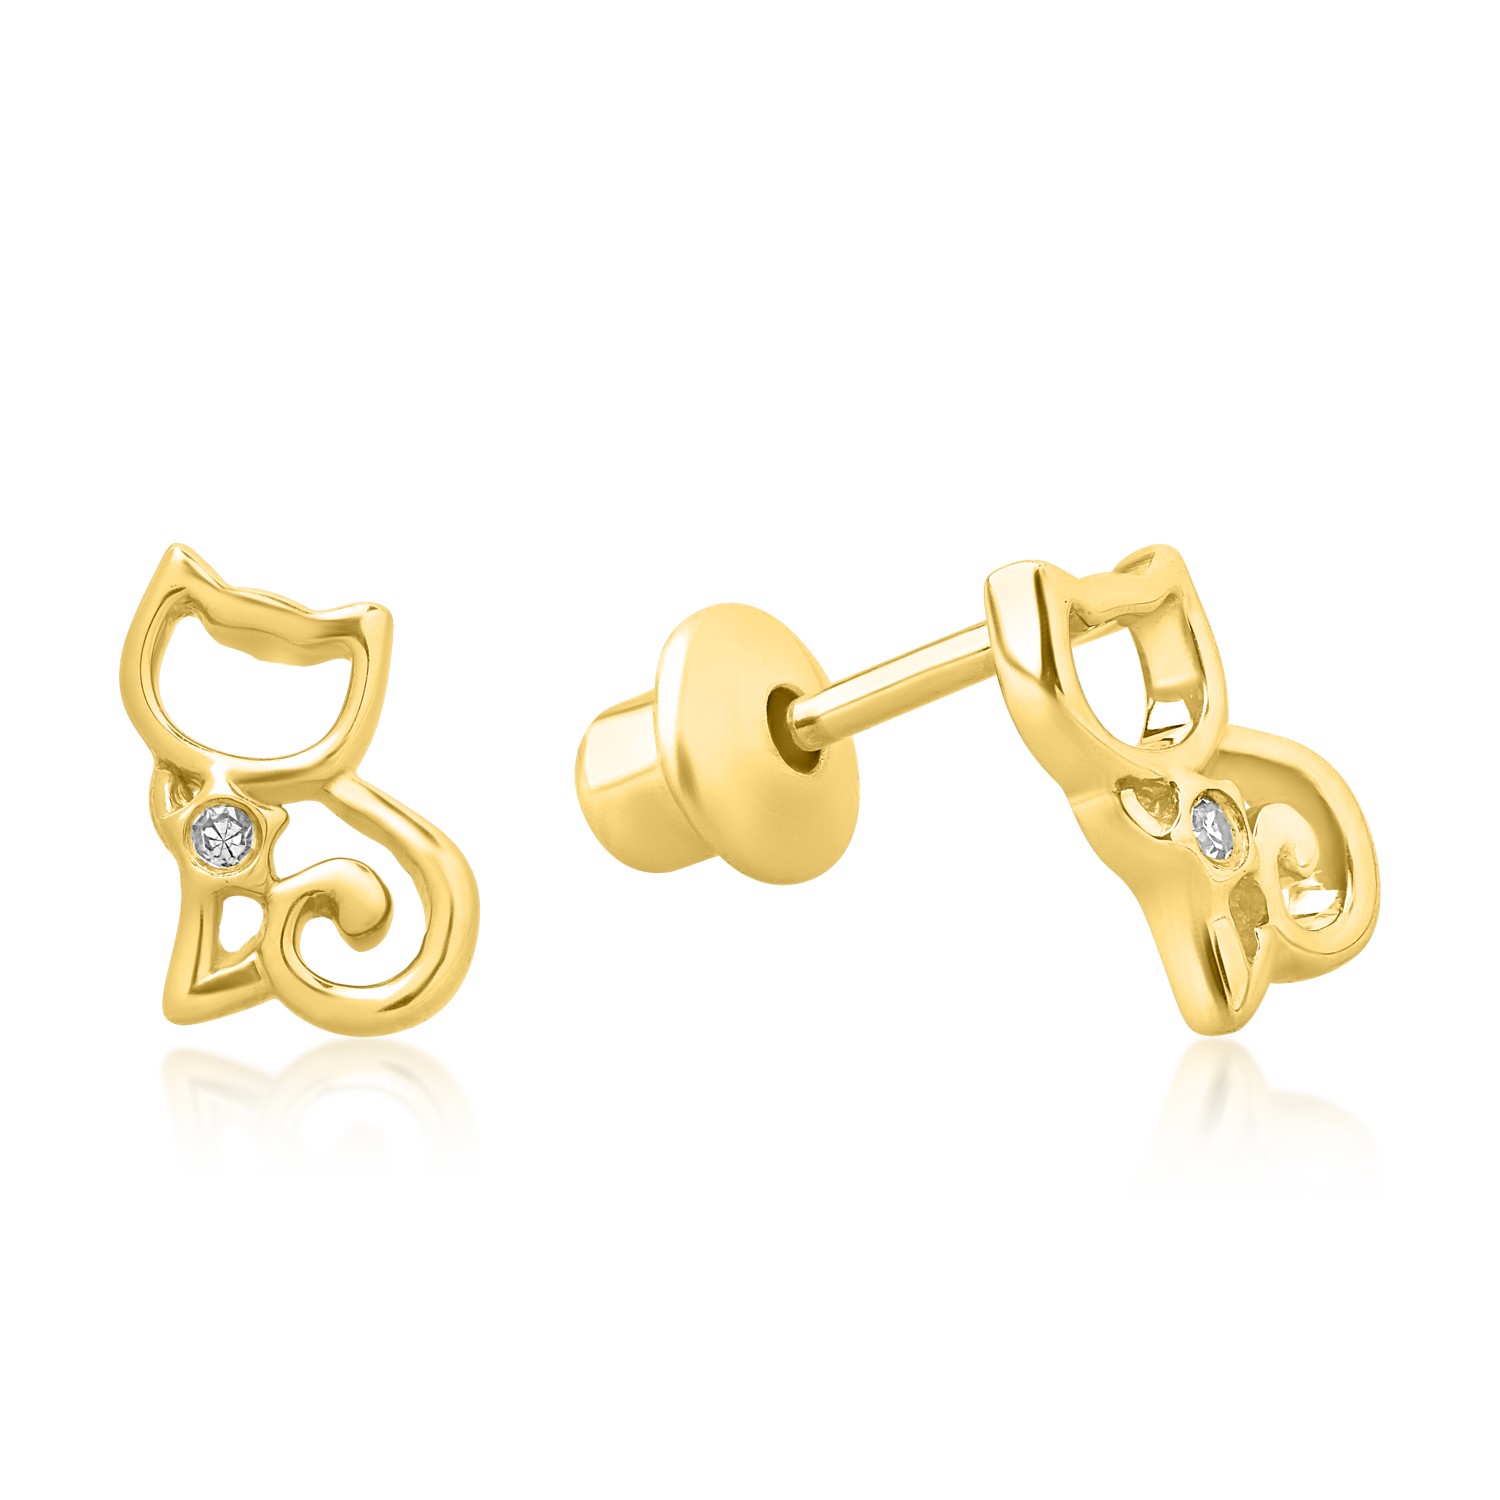 14K yellow gold children's cat earrings with 0.008ct diamonds